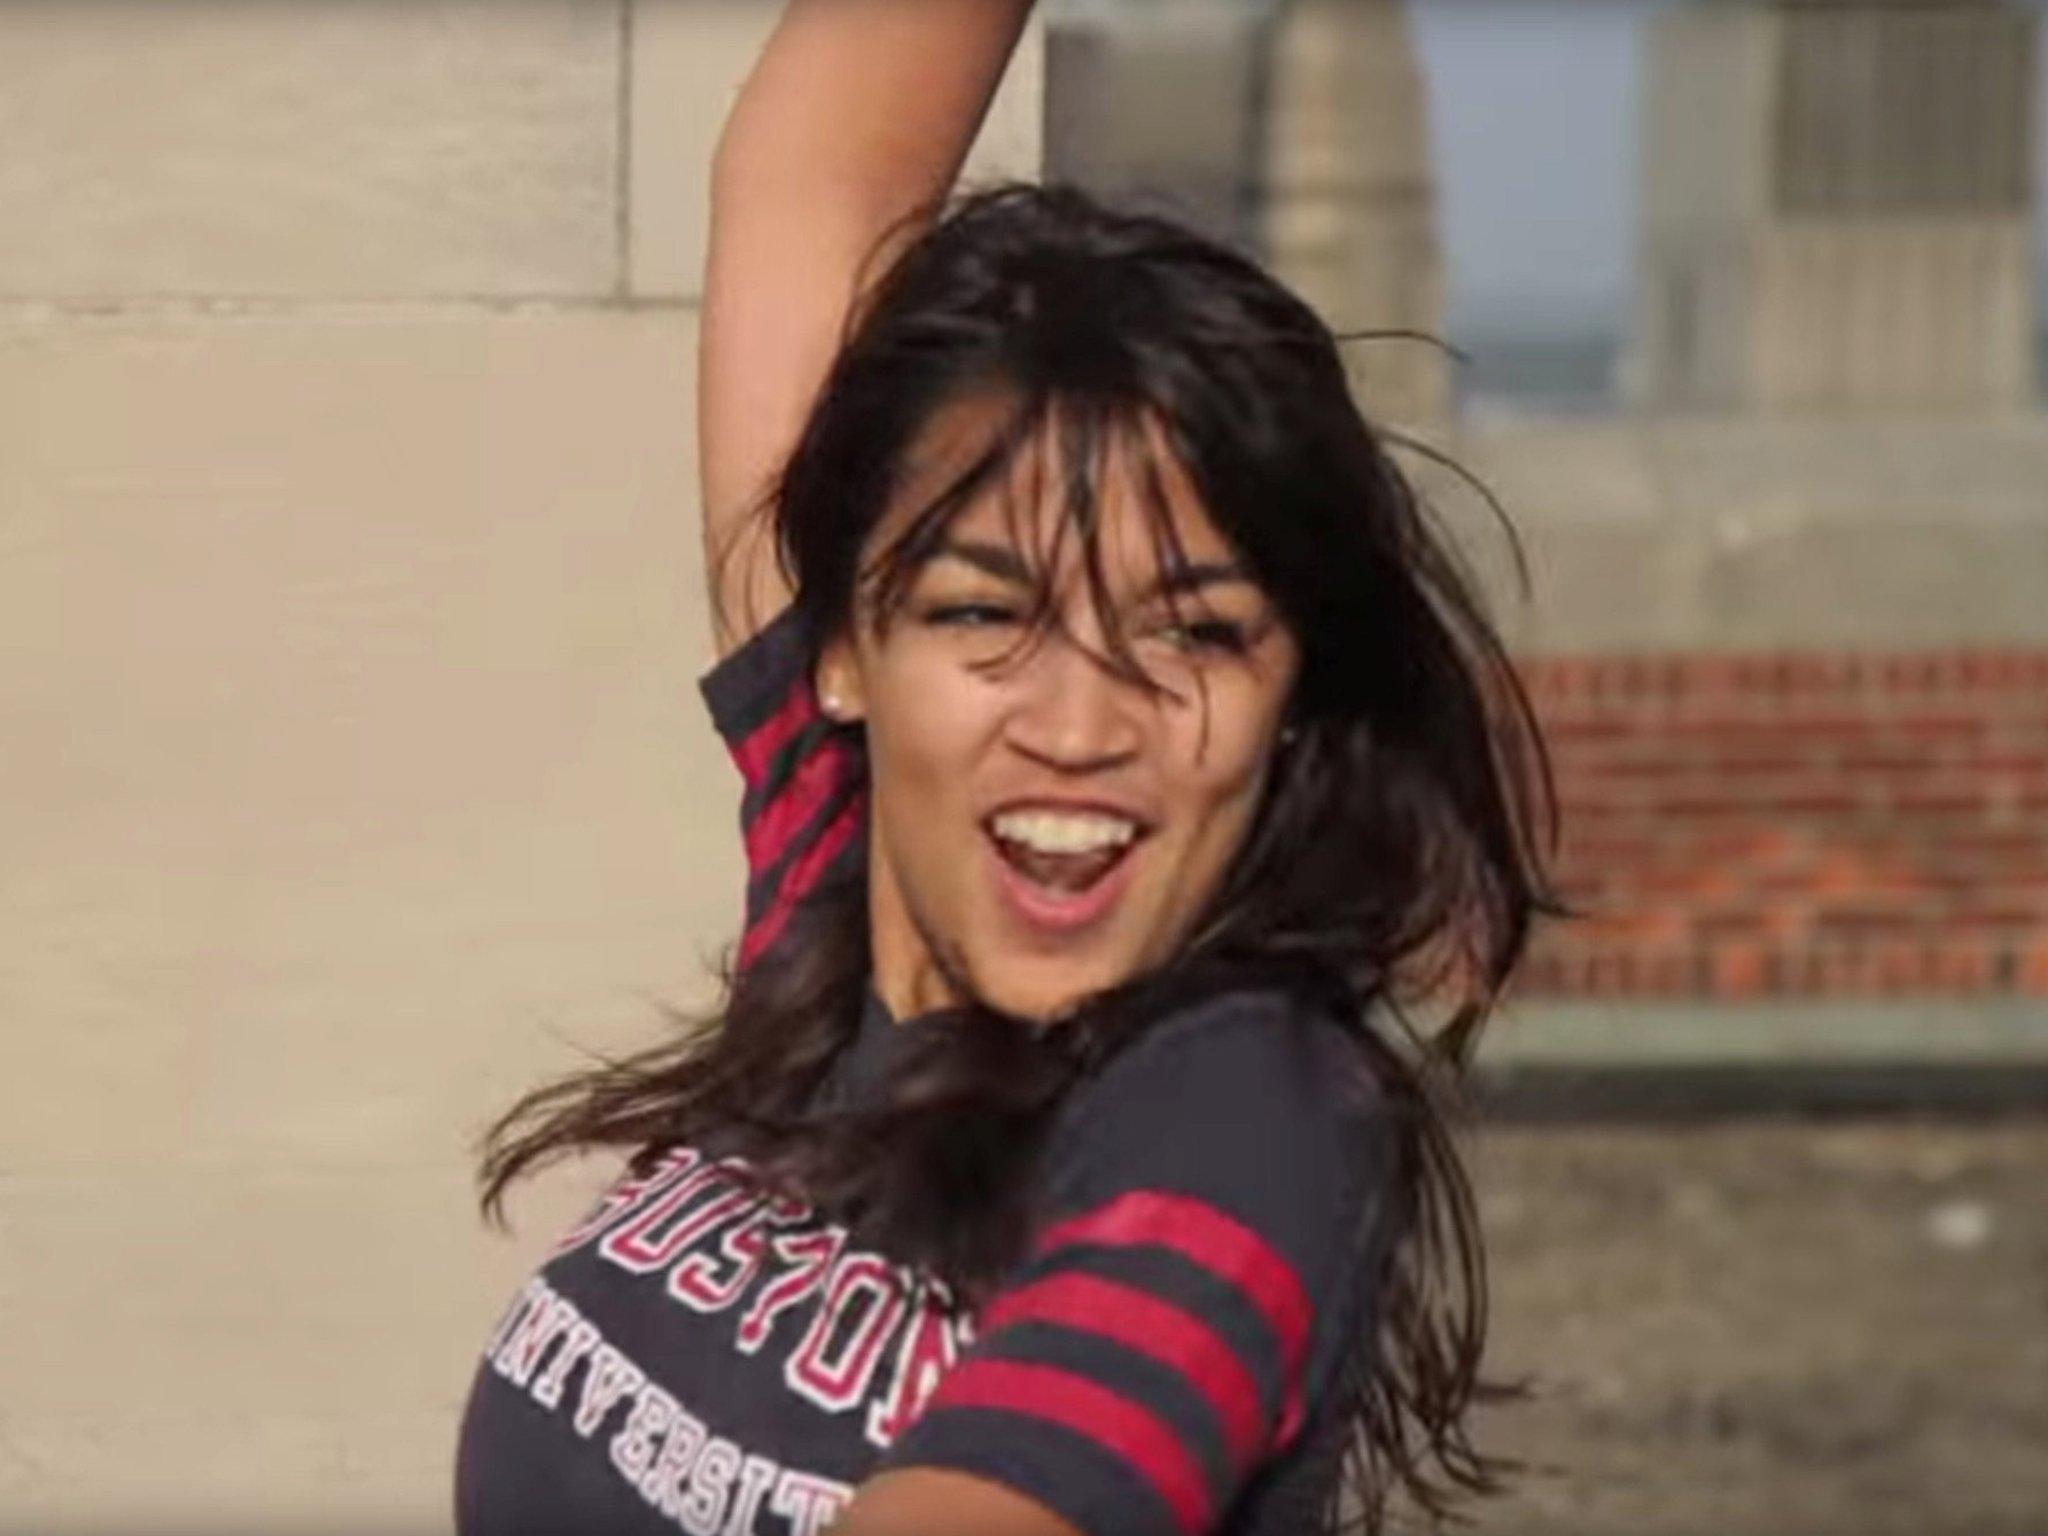 Alexandria Ocasio Cortez Dancing Video Leads To 192 Per Cent